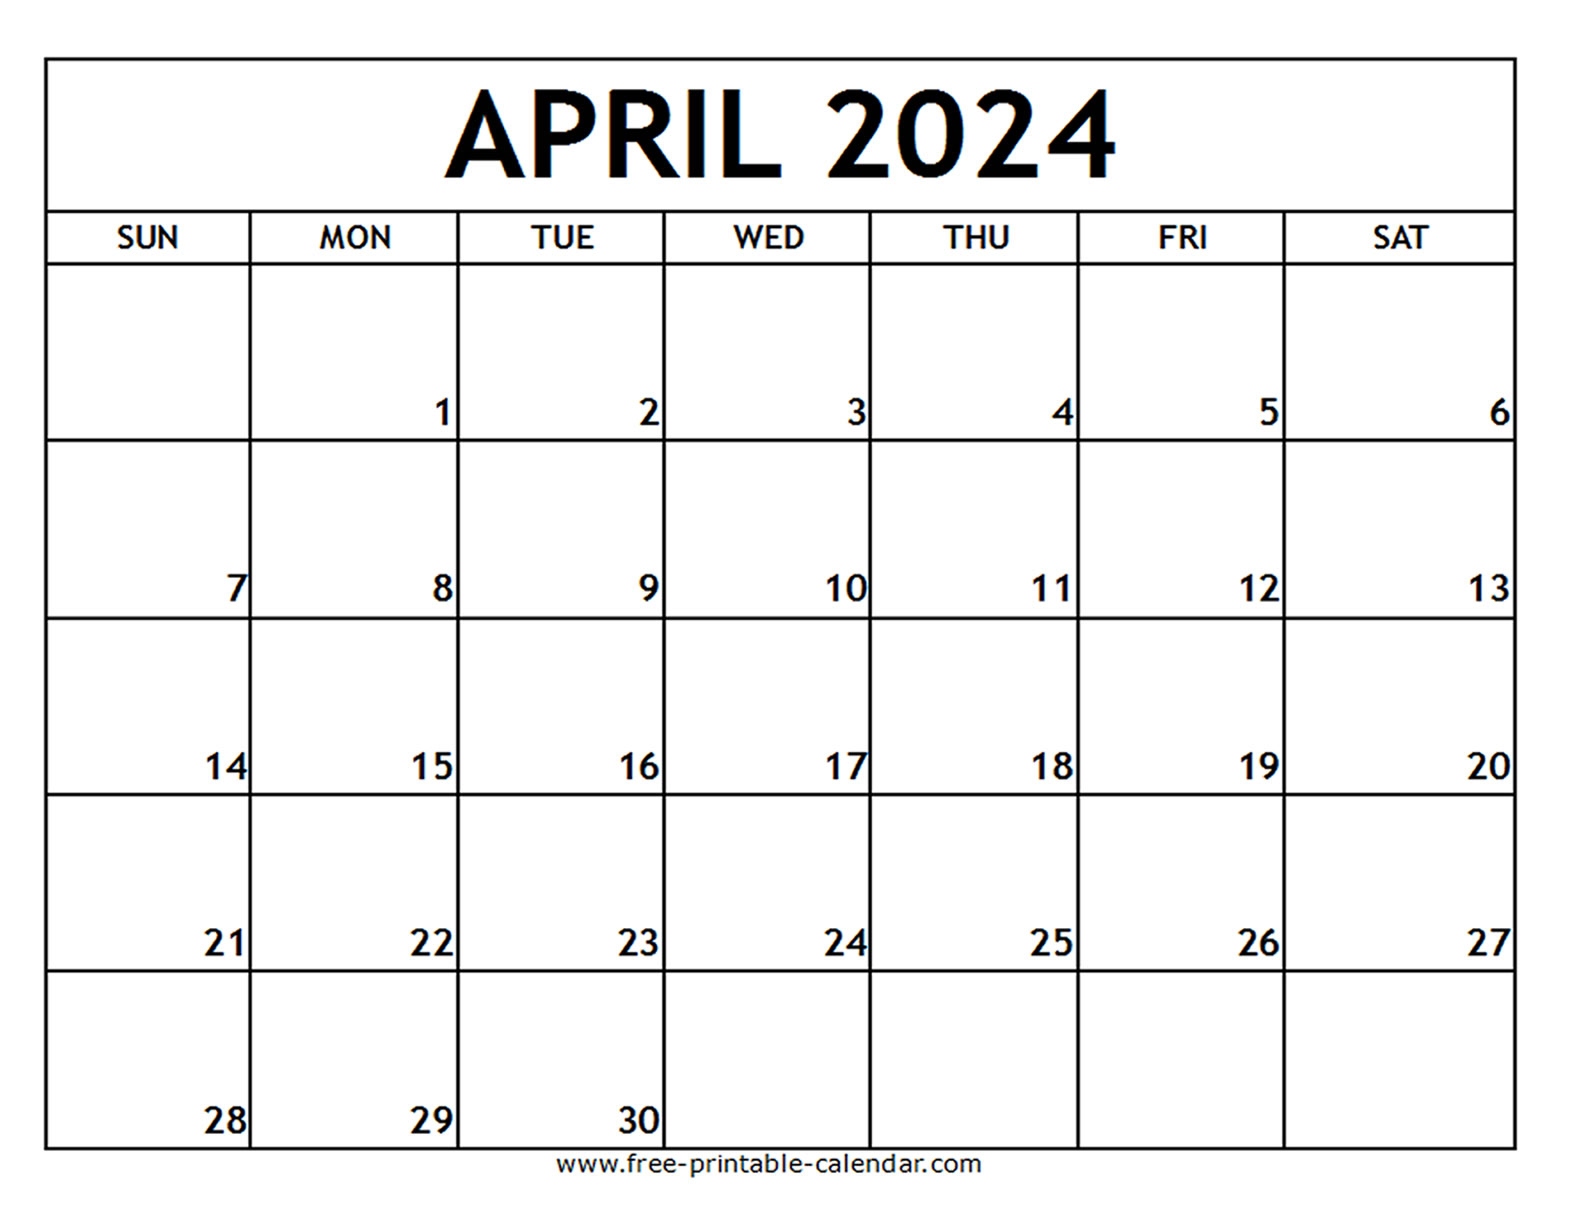 April 2024 Printable Calendar - Free-Printable-Calendar with Free Printable Calendar April2024